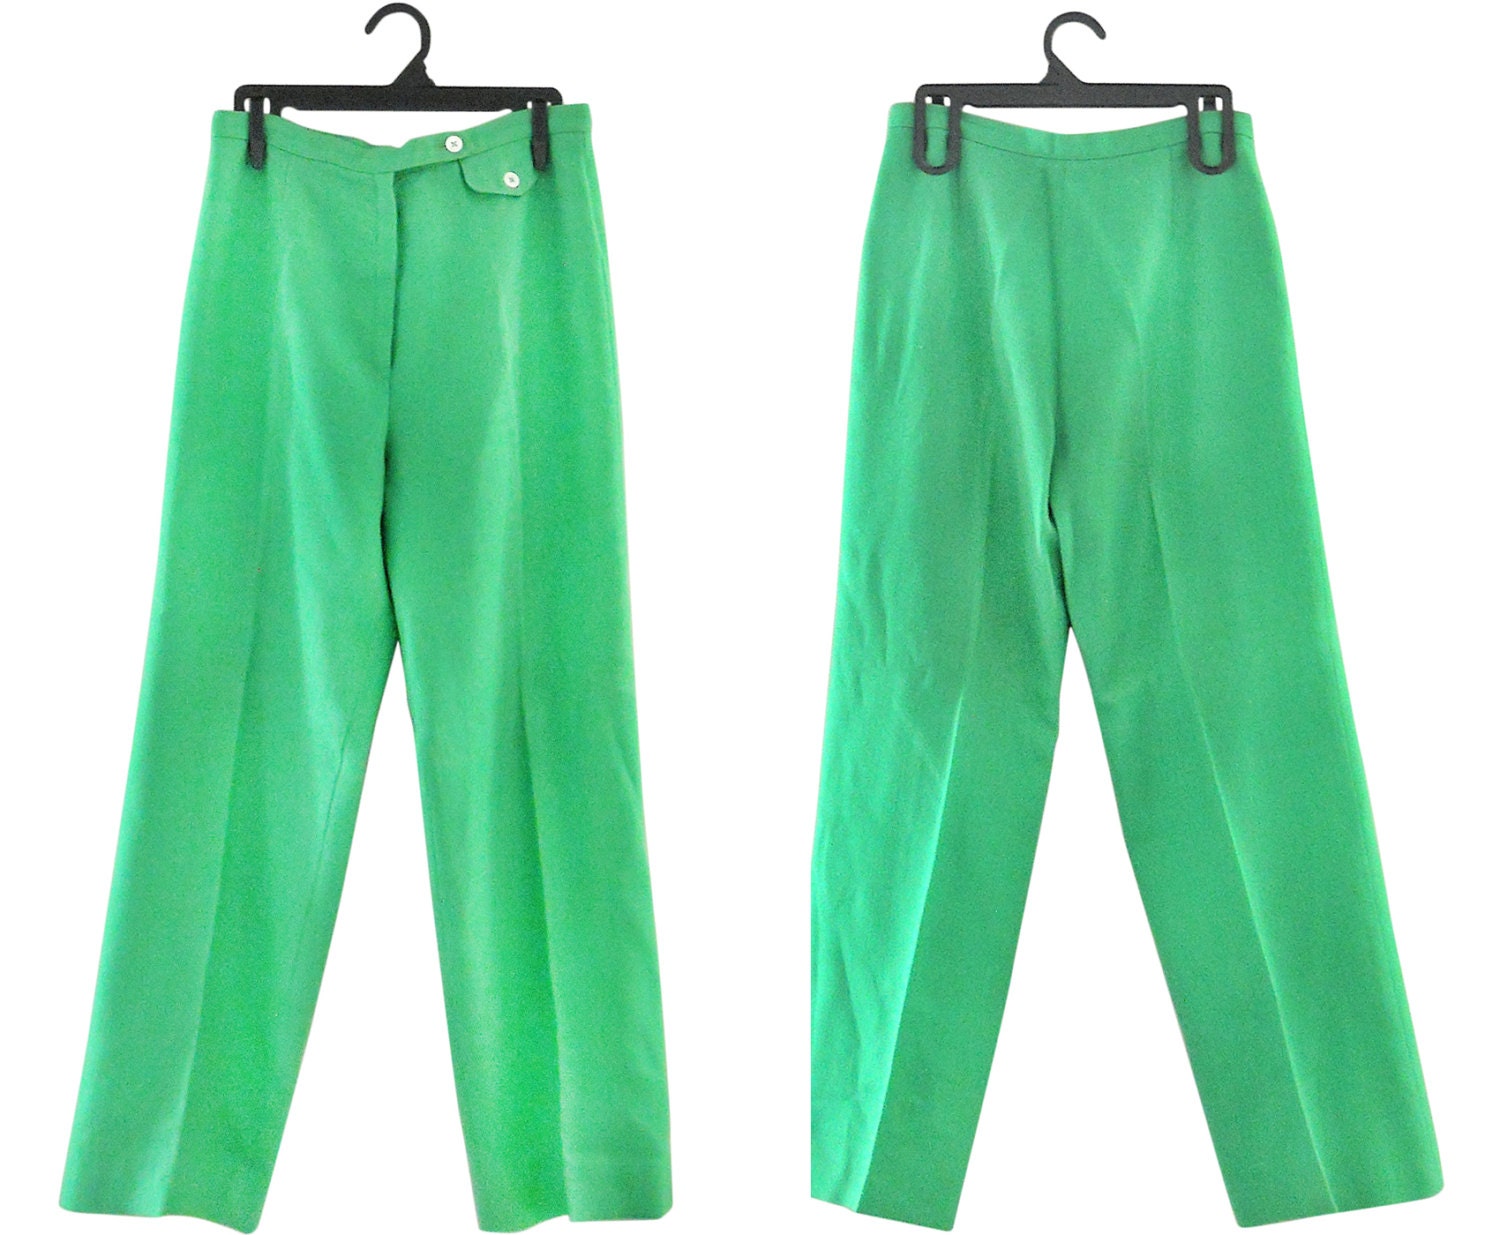 clip art green pants - photo #32